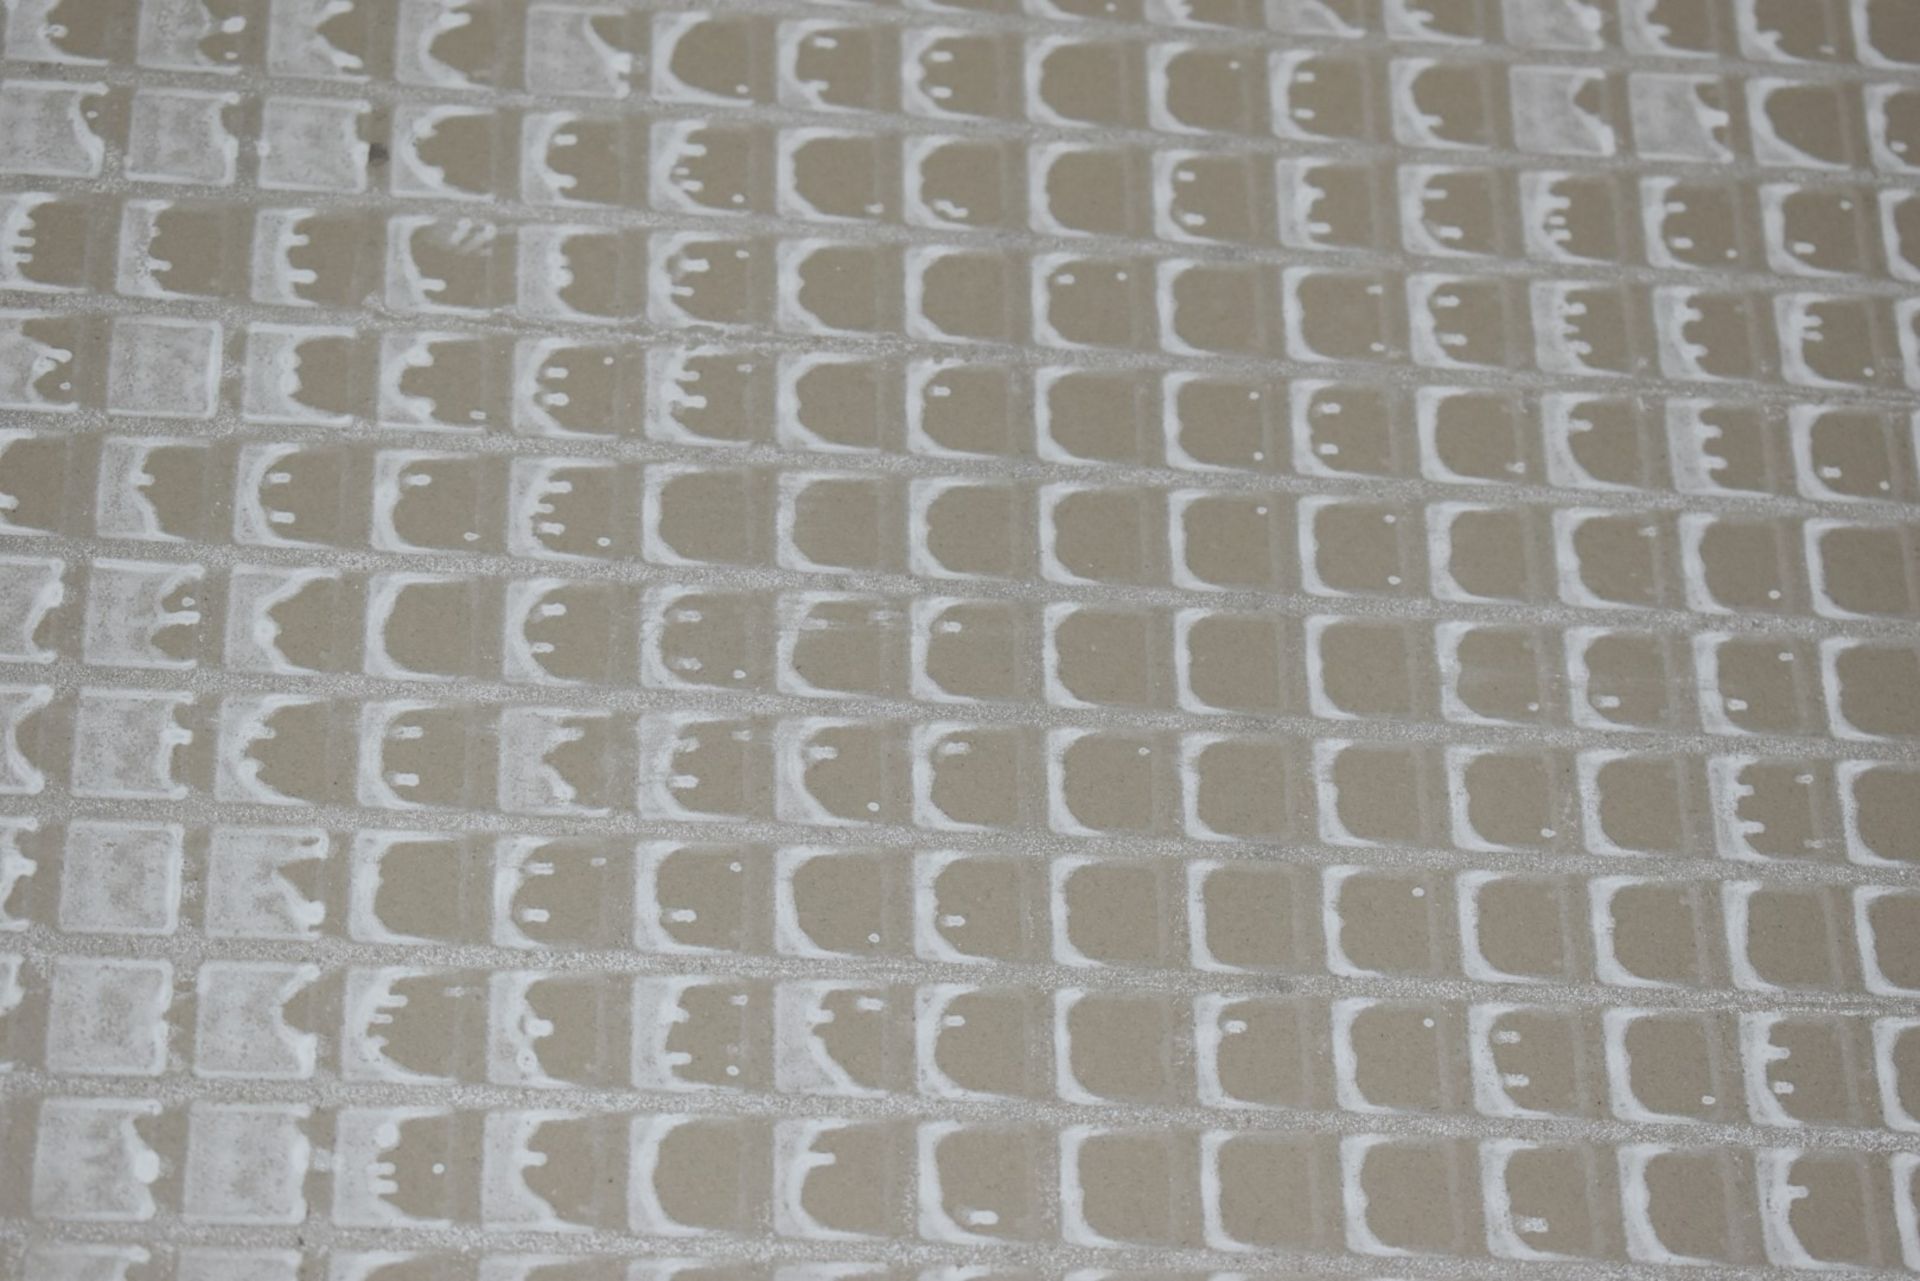 12 x Boxes of RAK Porcelain Floor or Wall Tiles - Concrete Sand Design in Beige - 30 x 60 - Image 4 of 8